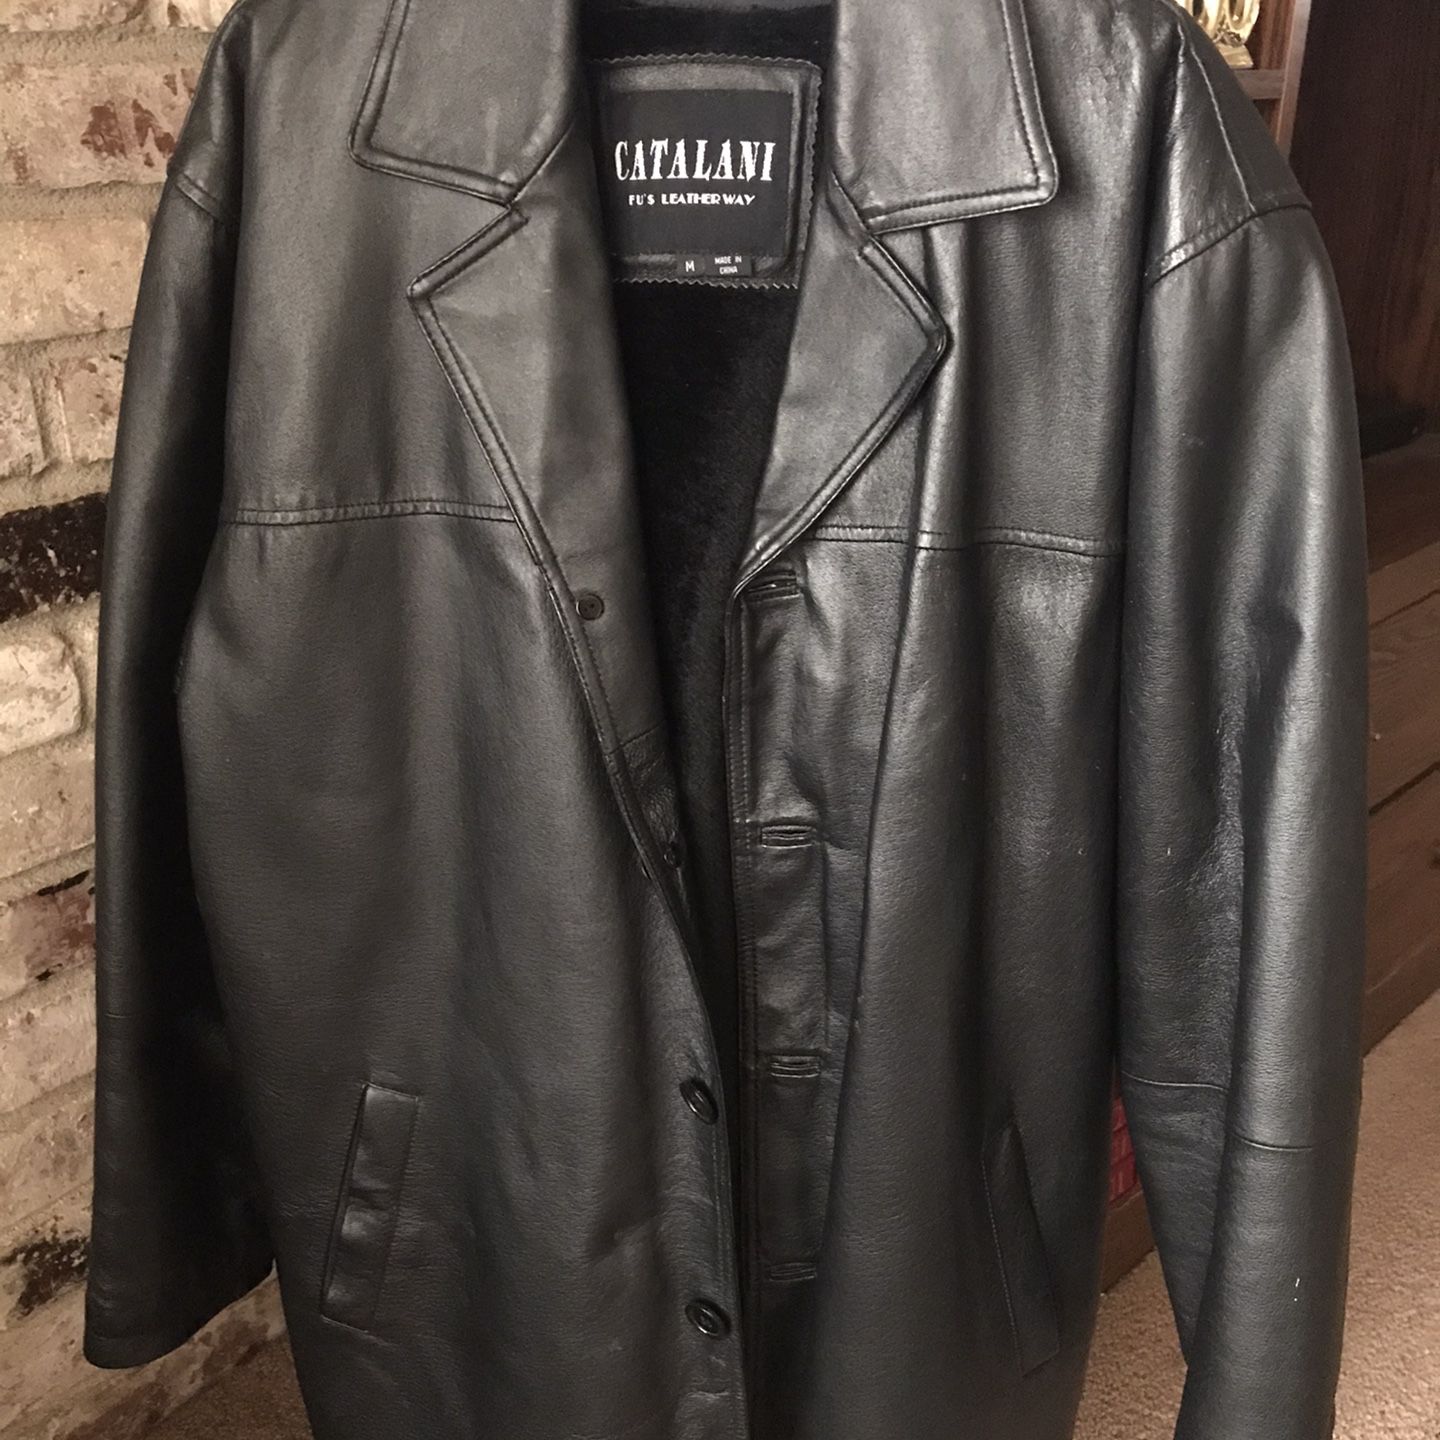 Shik For Men - Leather coats LV brand, Turkey made🇹🇷